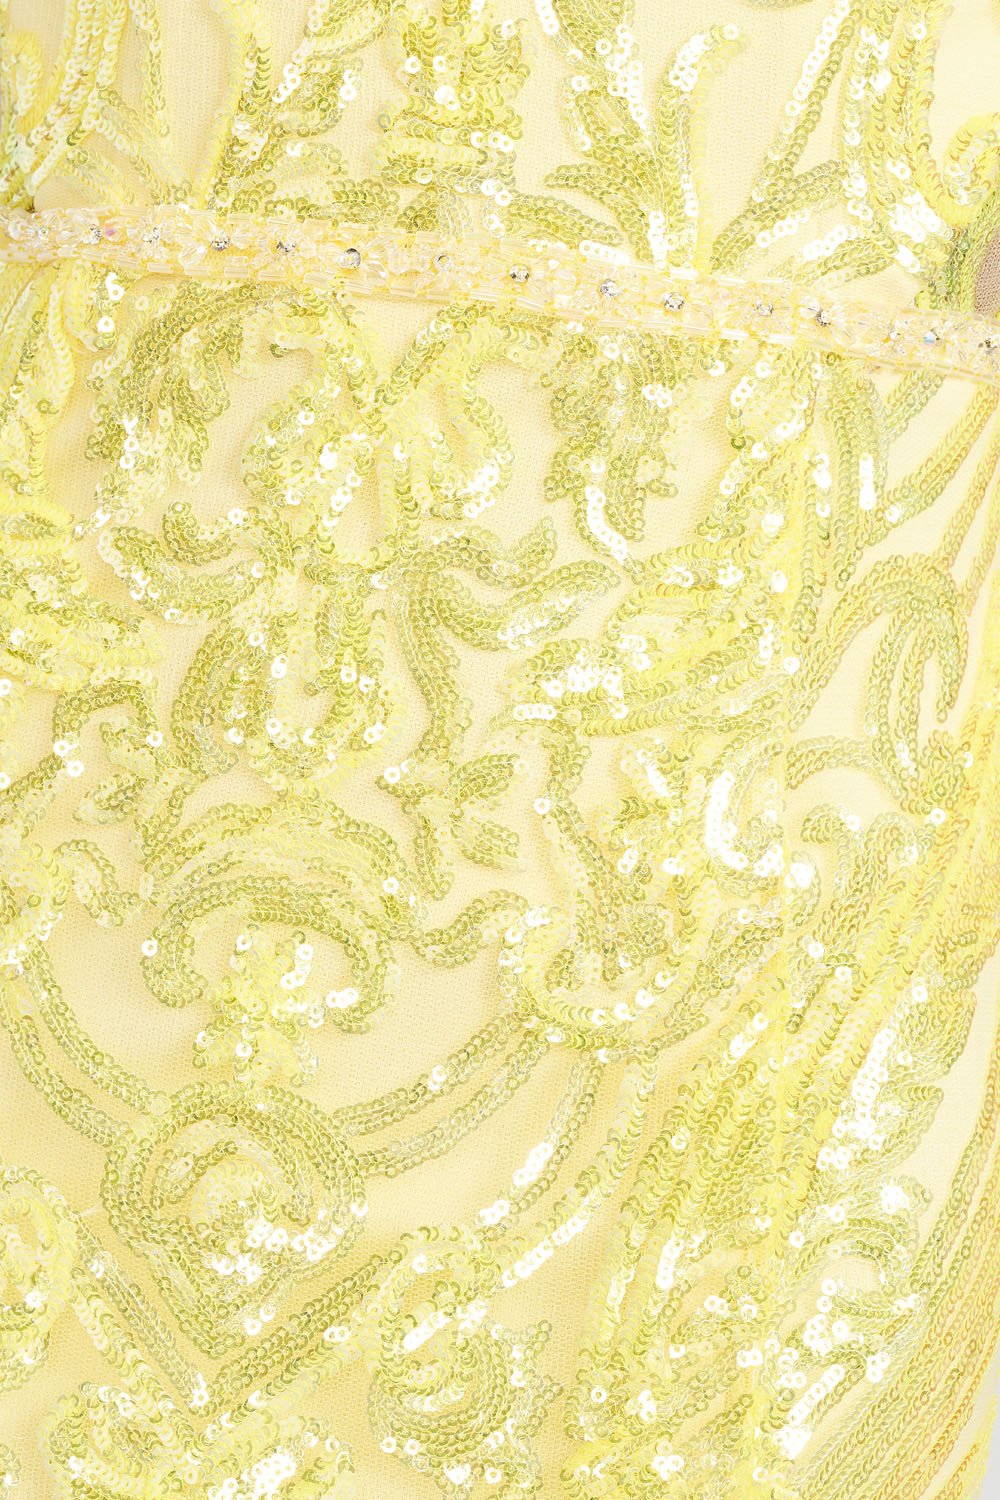 Ellie Wilde Yellow EW122022 Prom Dress Image.  Yellow formal dress.